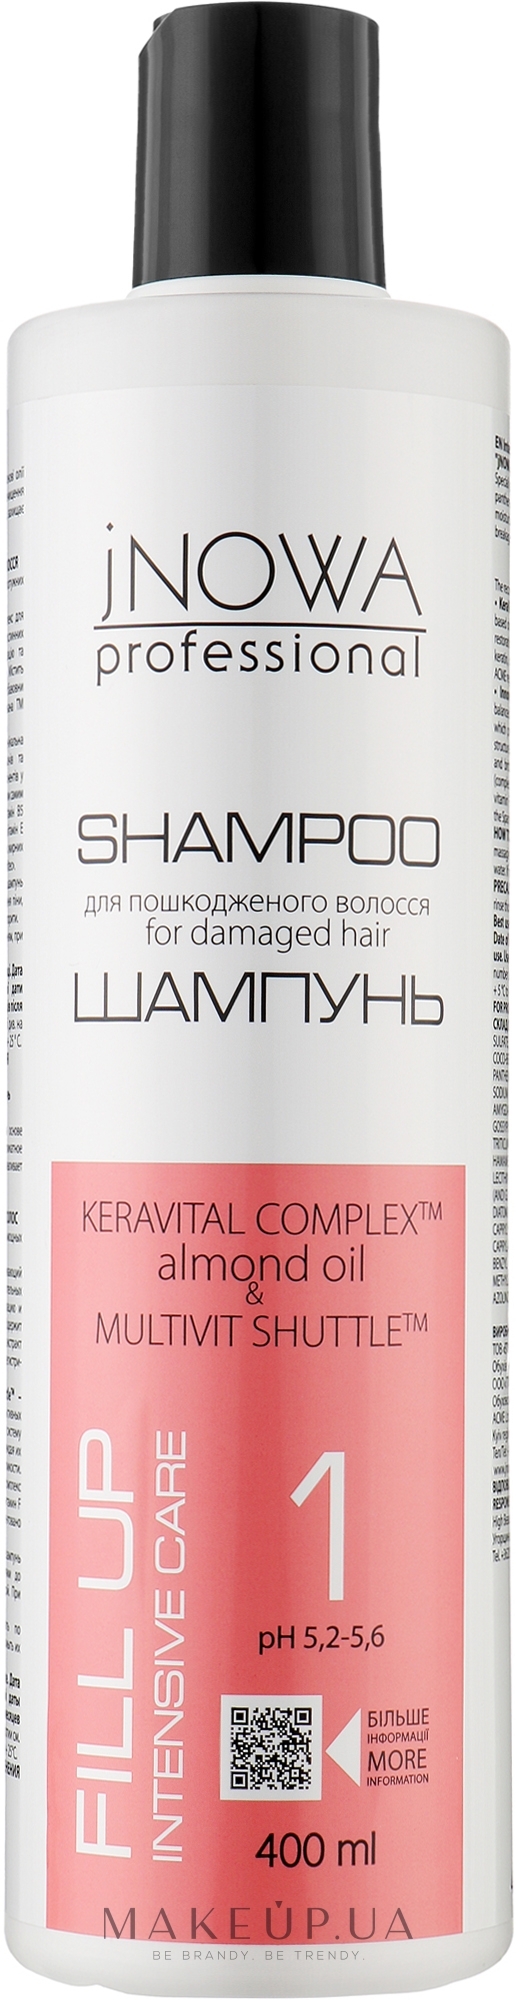 Интенсивно восстанавливающий шампунь - jNOWA Professional Fill Up Shampoo — фото 400ml